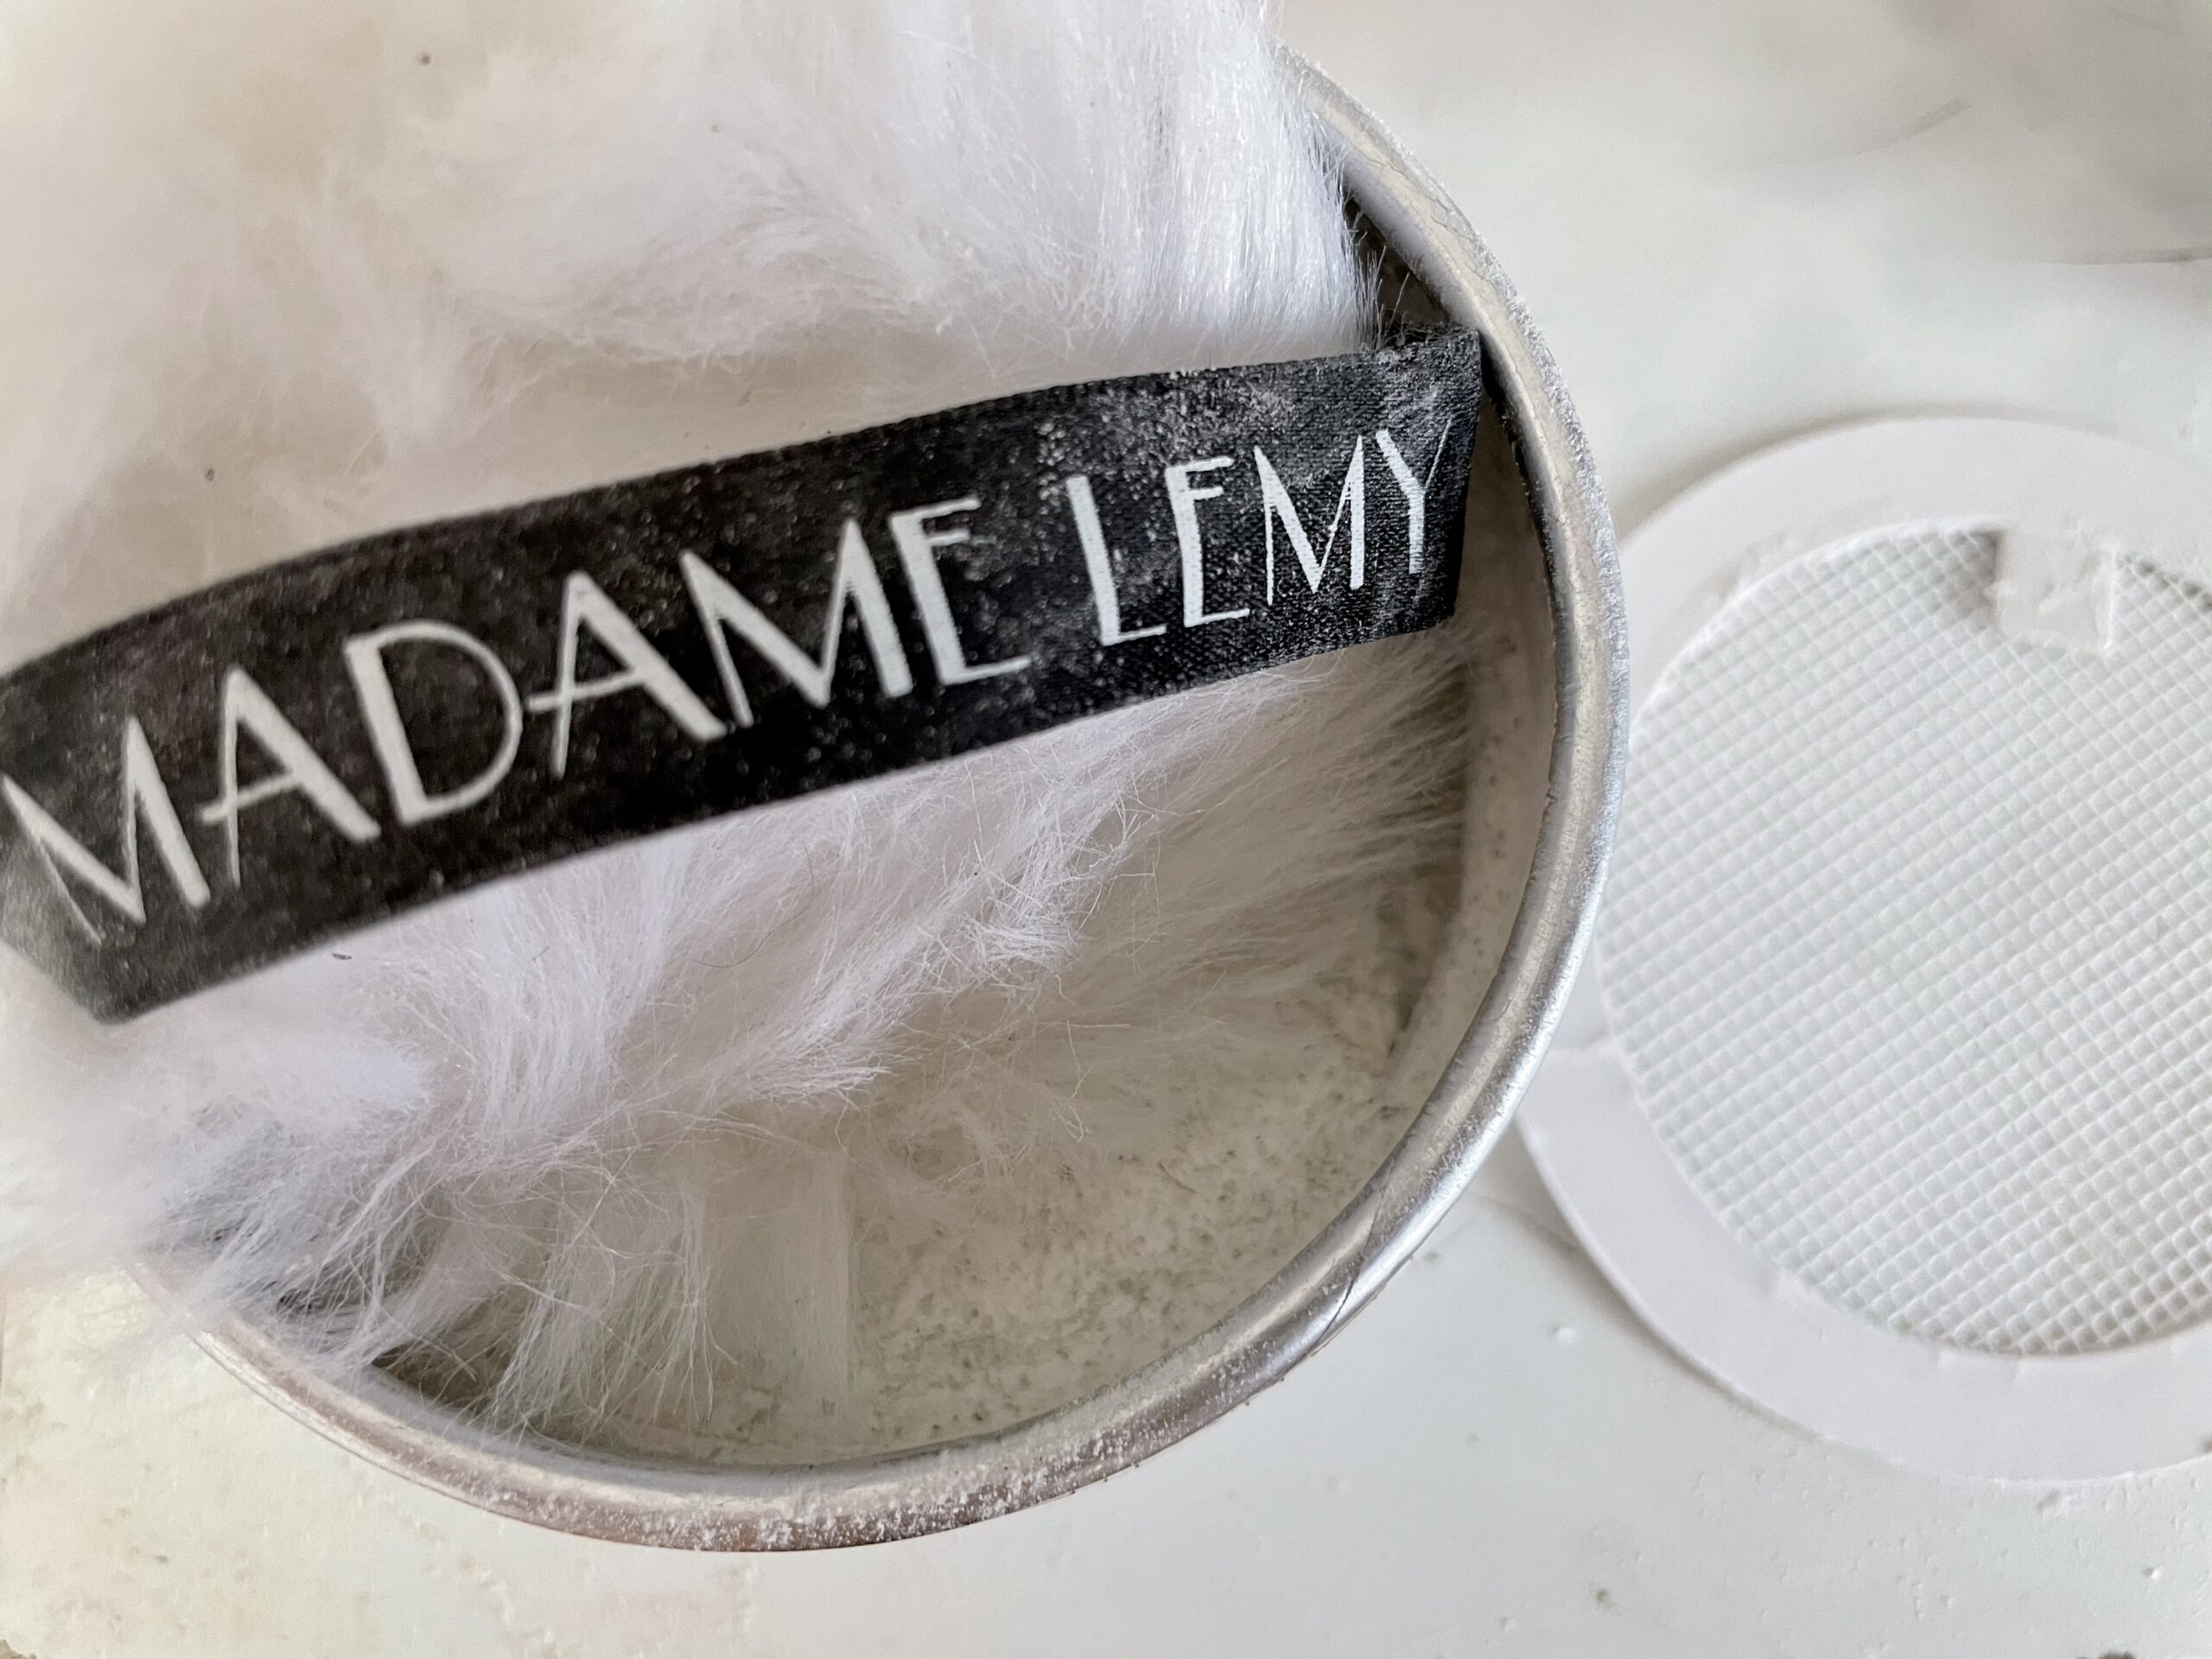 Madame Lemy deodorant